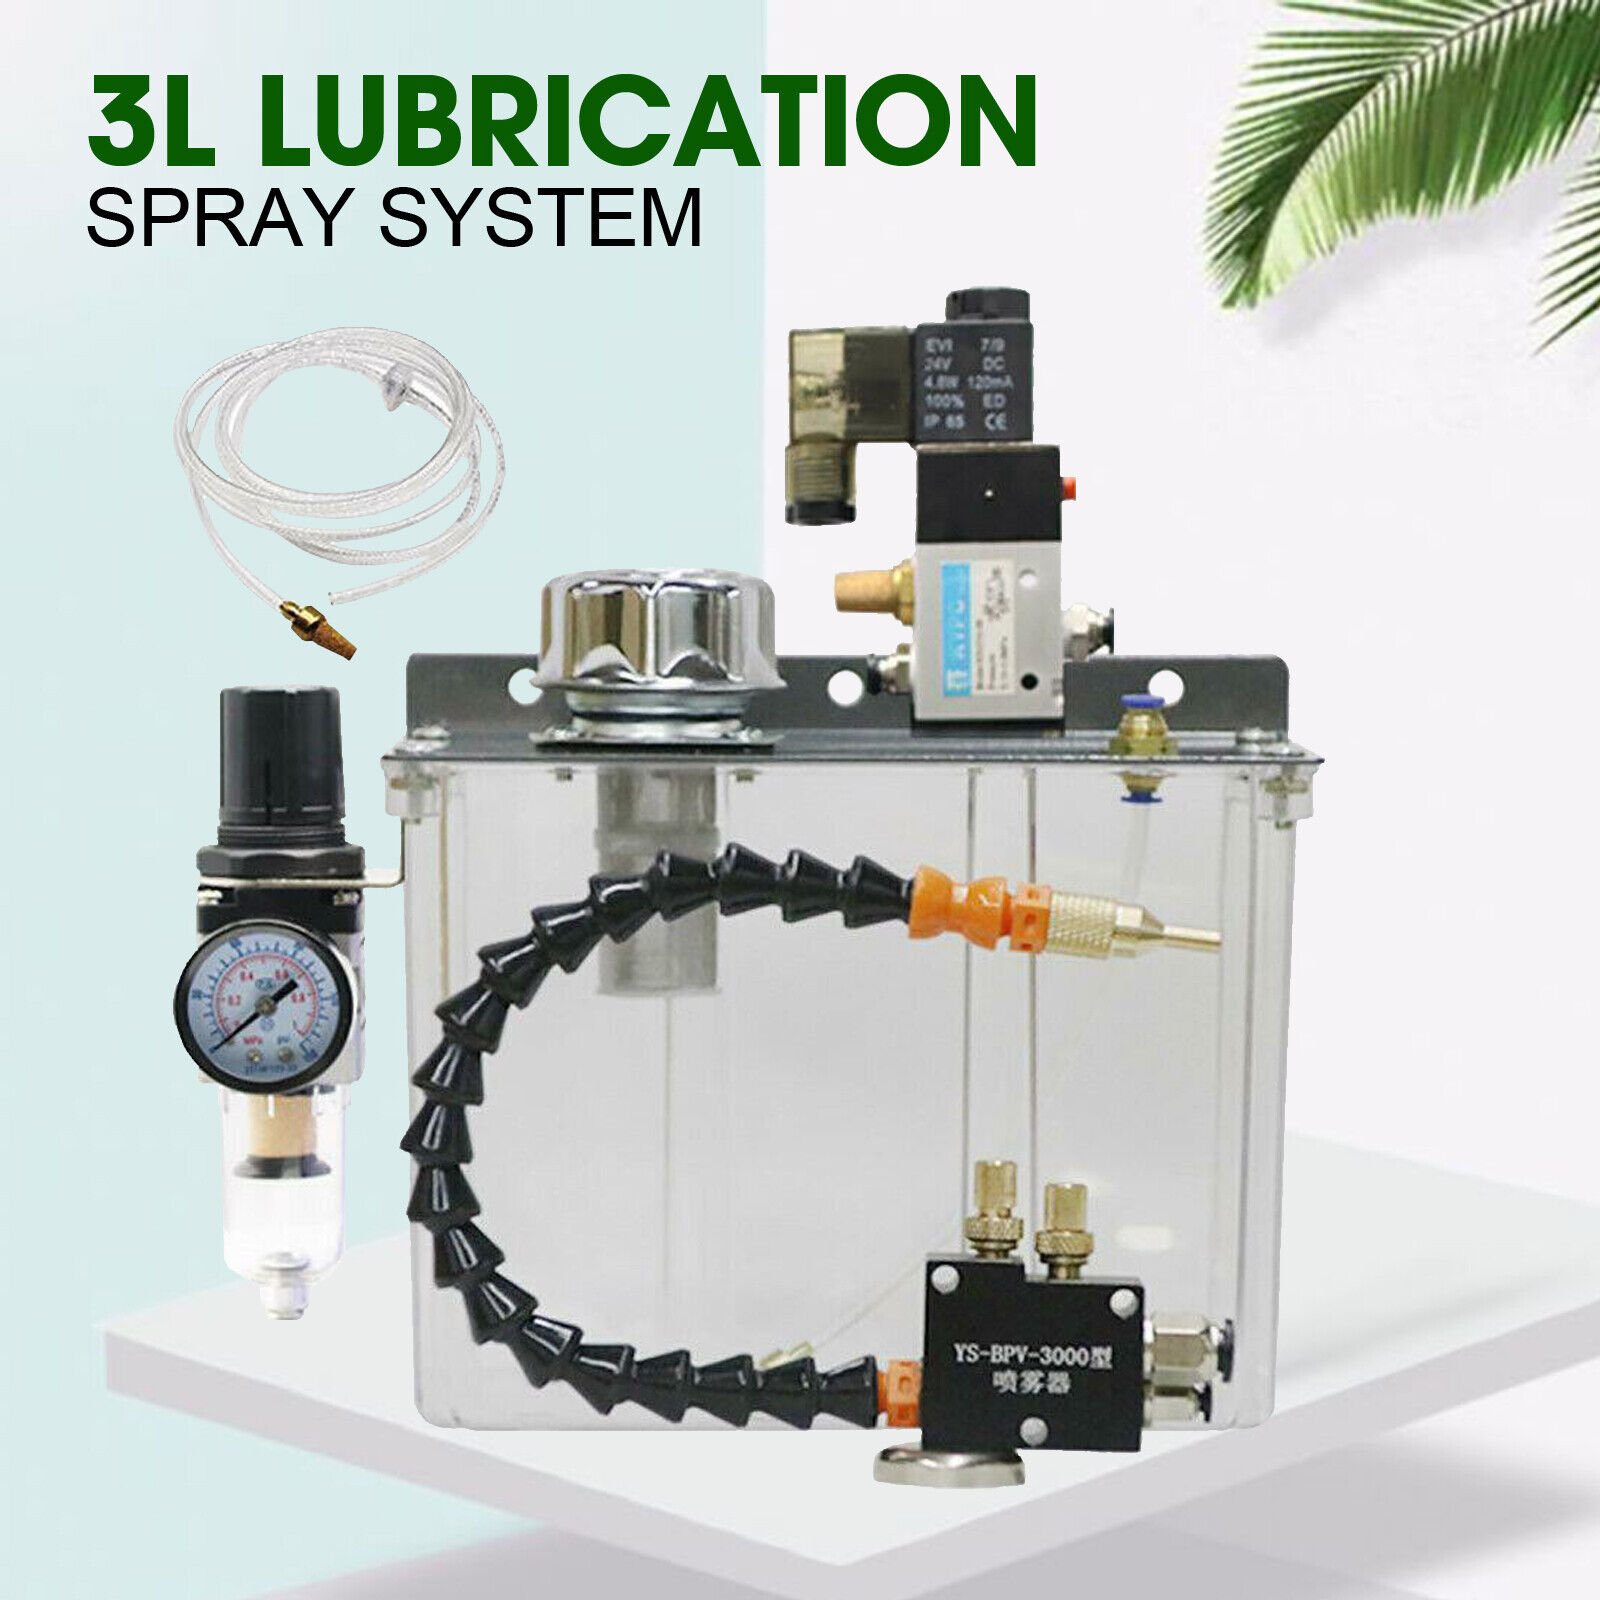 3L Lubrication Spray System,Spray Cooler Coolant Pump Oil Mist Sprayer